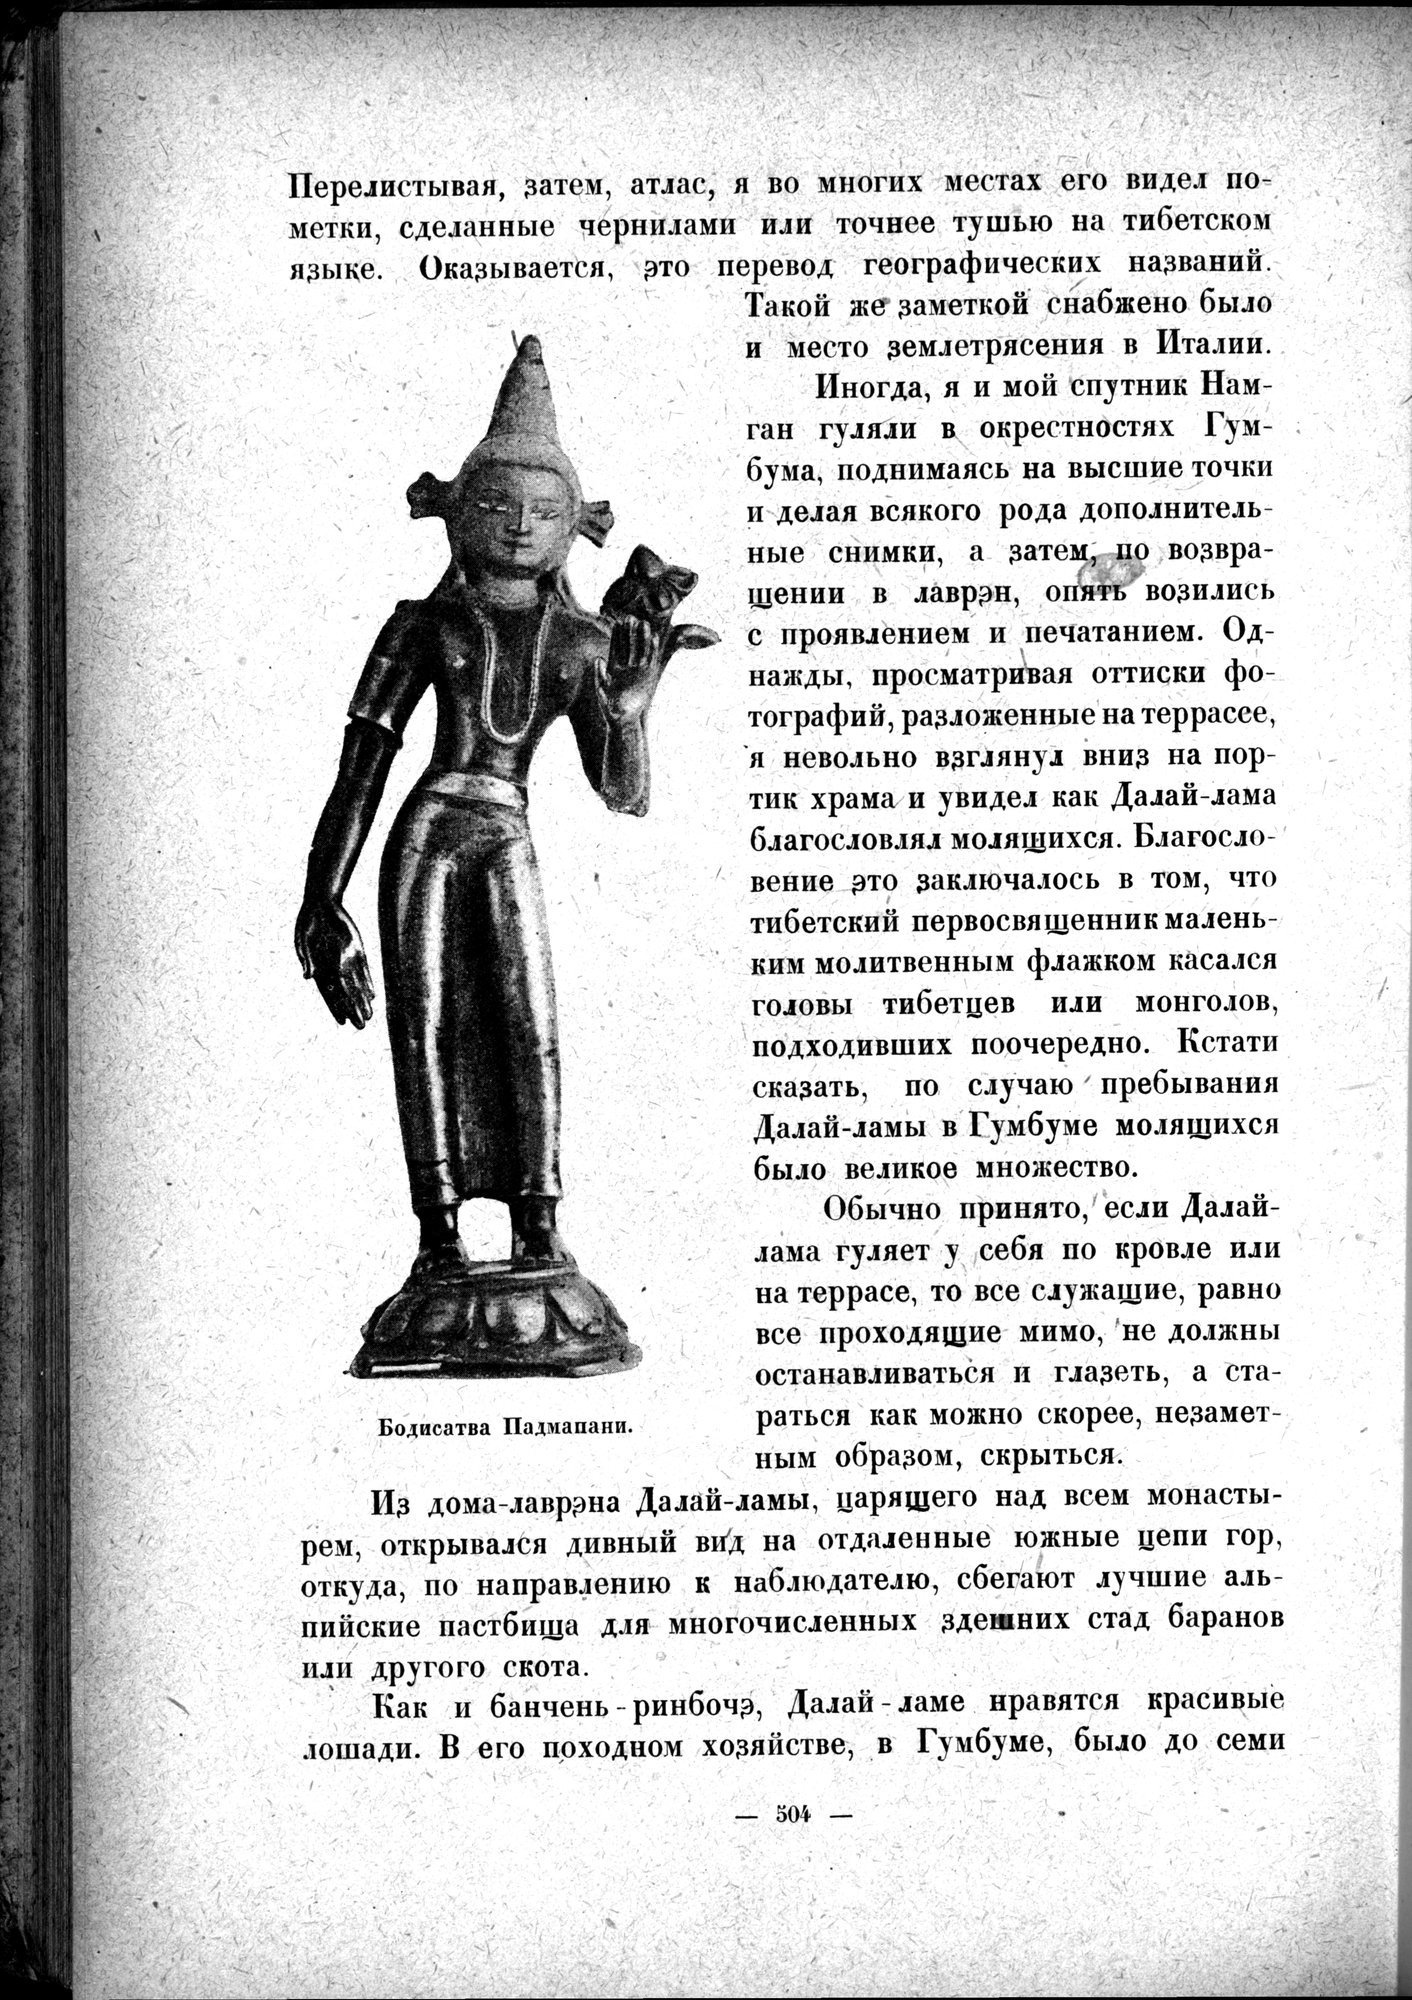 Mongoliya i Amdo i mertby gorod Khara-Khoto : vol.1 / Page 578 (Grayscale High Resolution Image)